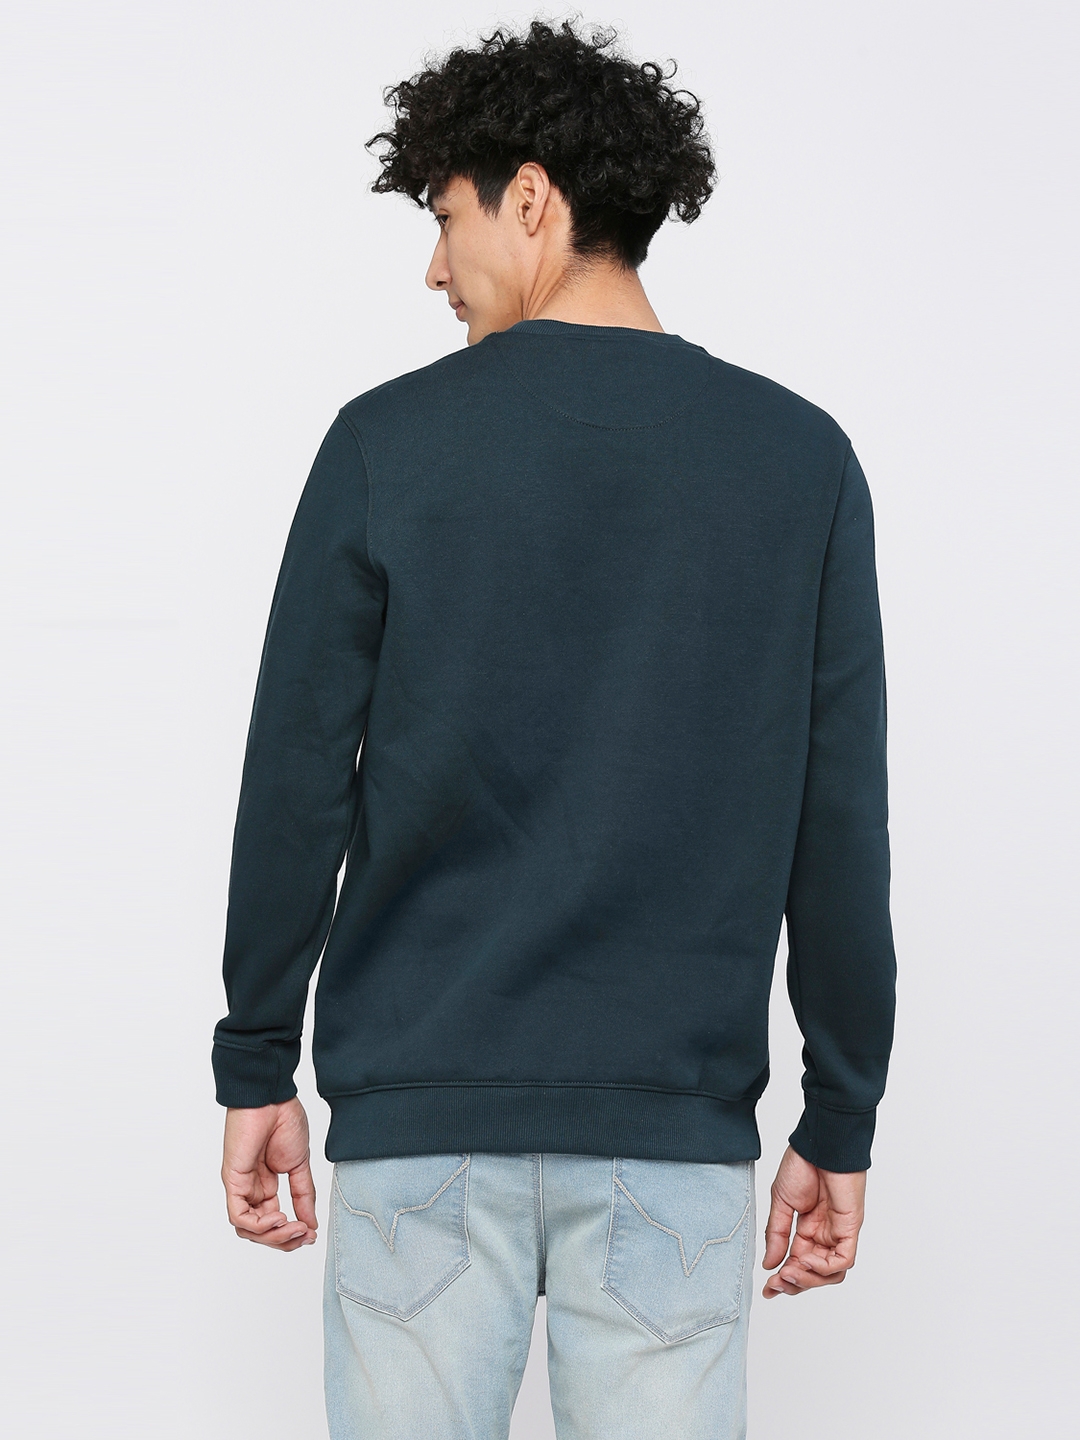 spykar | Spykar Teal Blue Cotton Full Sleeve Round Neck Sweatshirt For Men 3